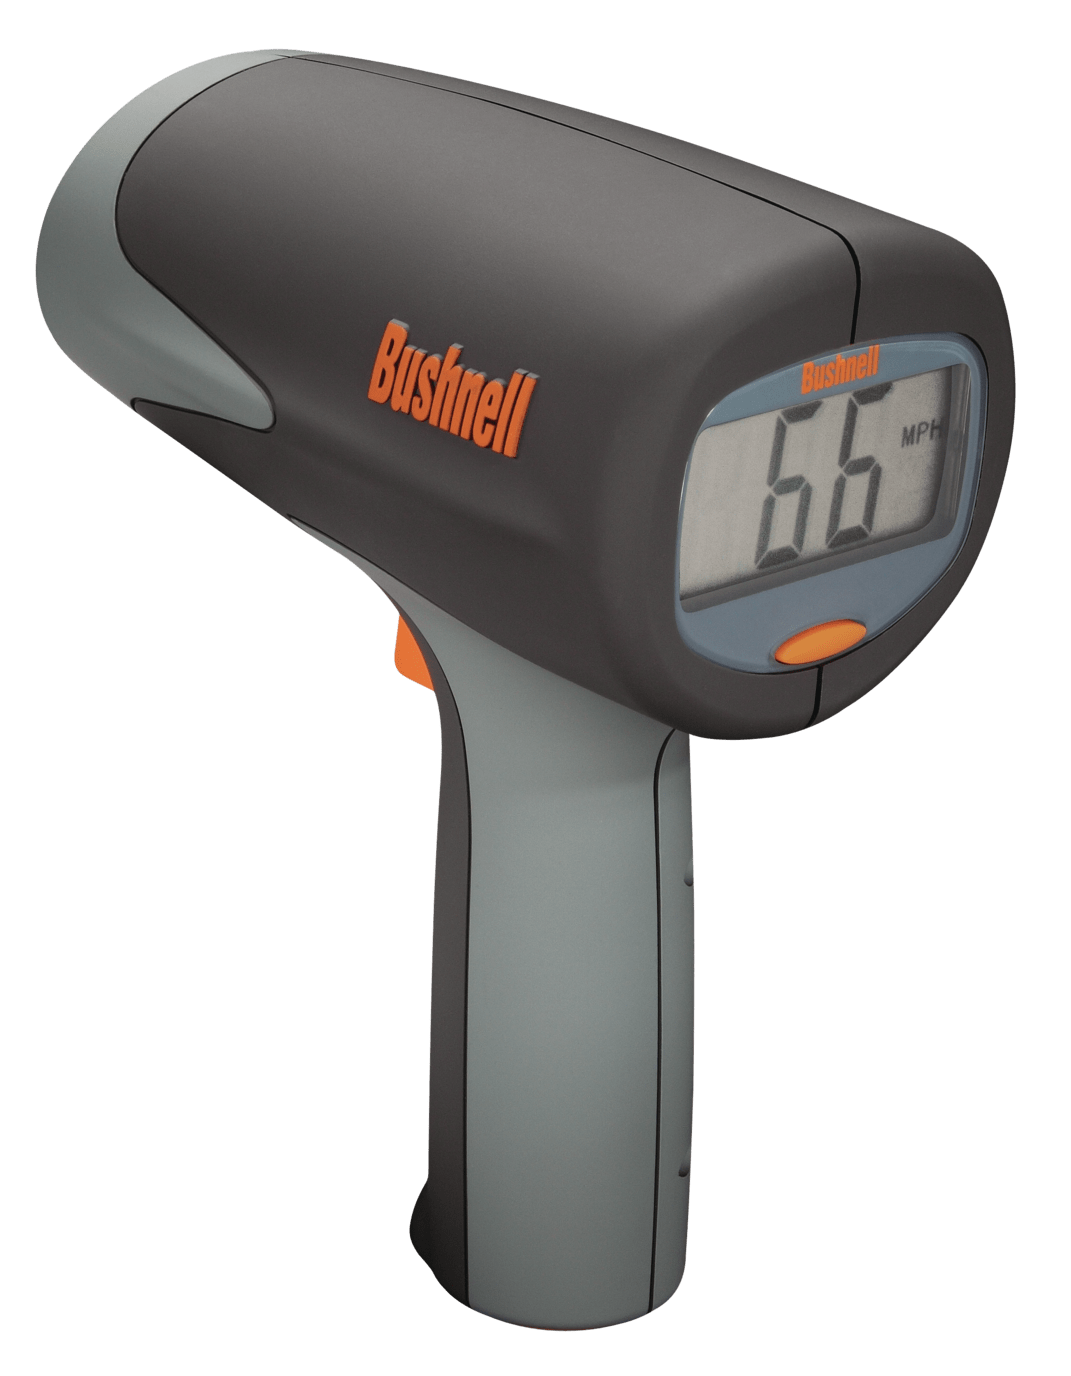 Bushnell Bushnell Velocity, Bush 101911   Velocity  Radar Gun Accessories